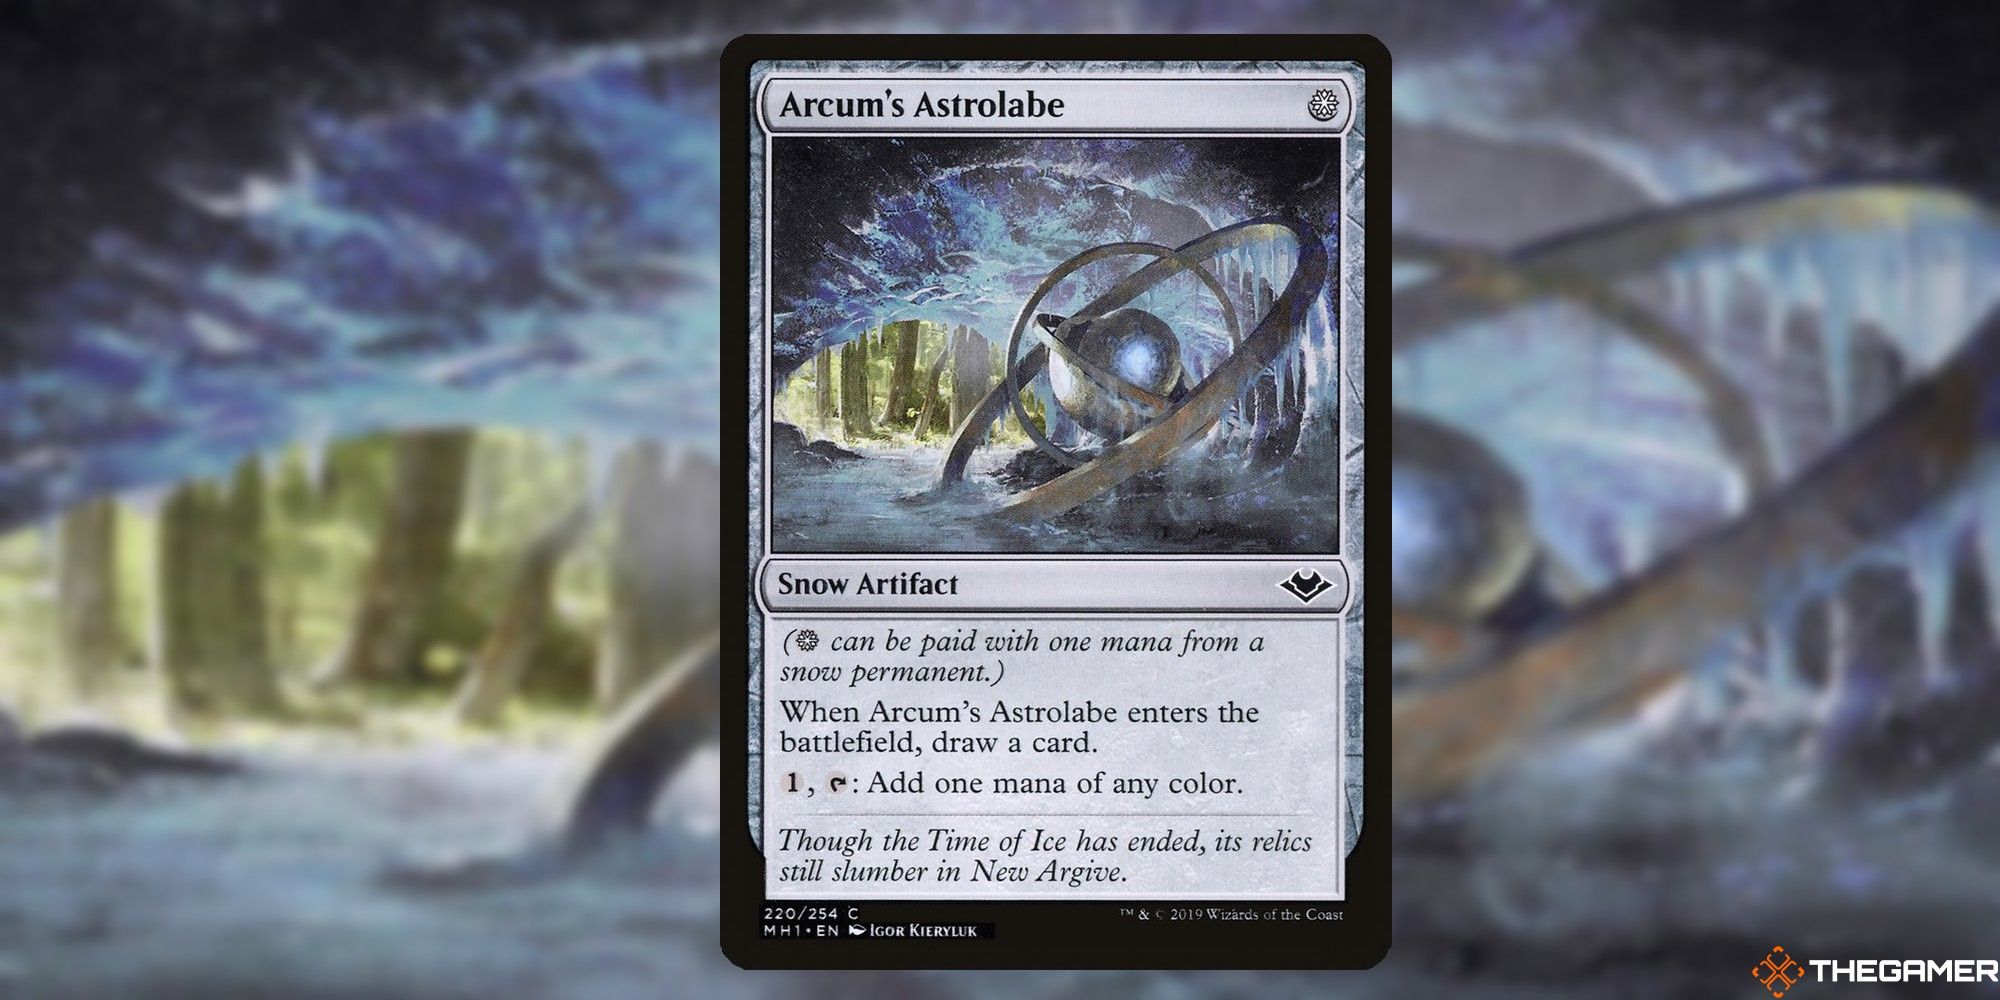 Arcum's Astrolabe card and art background